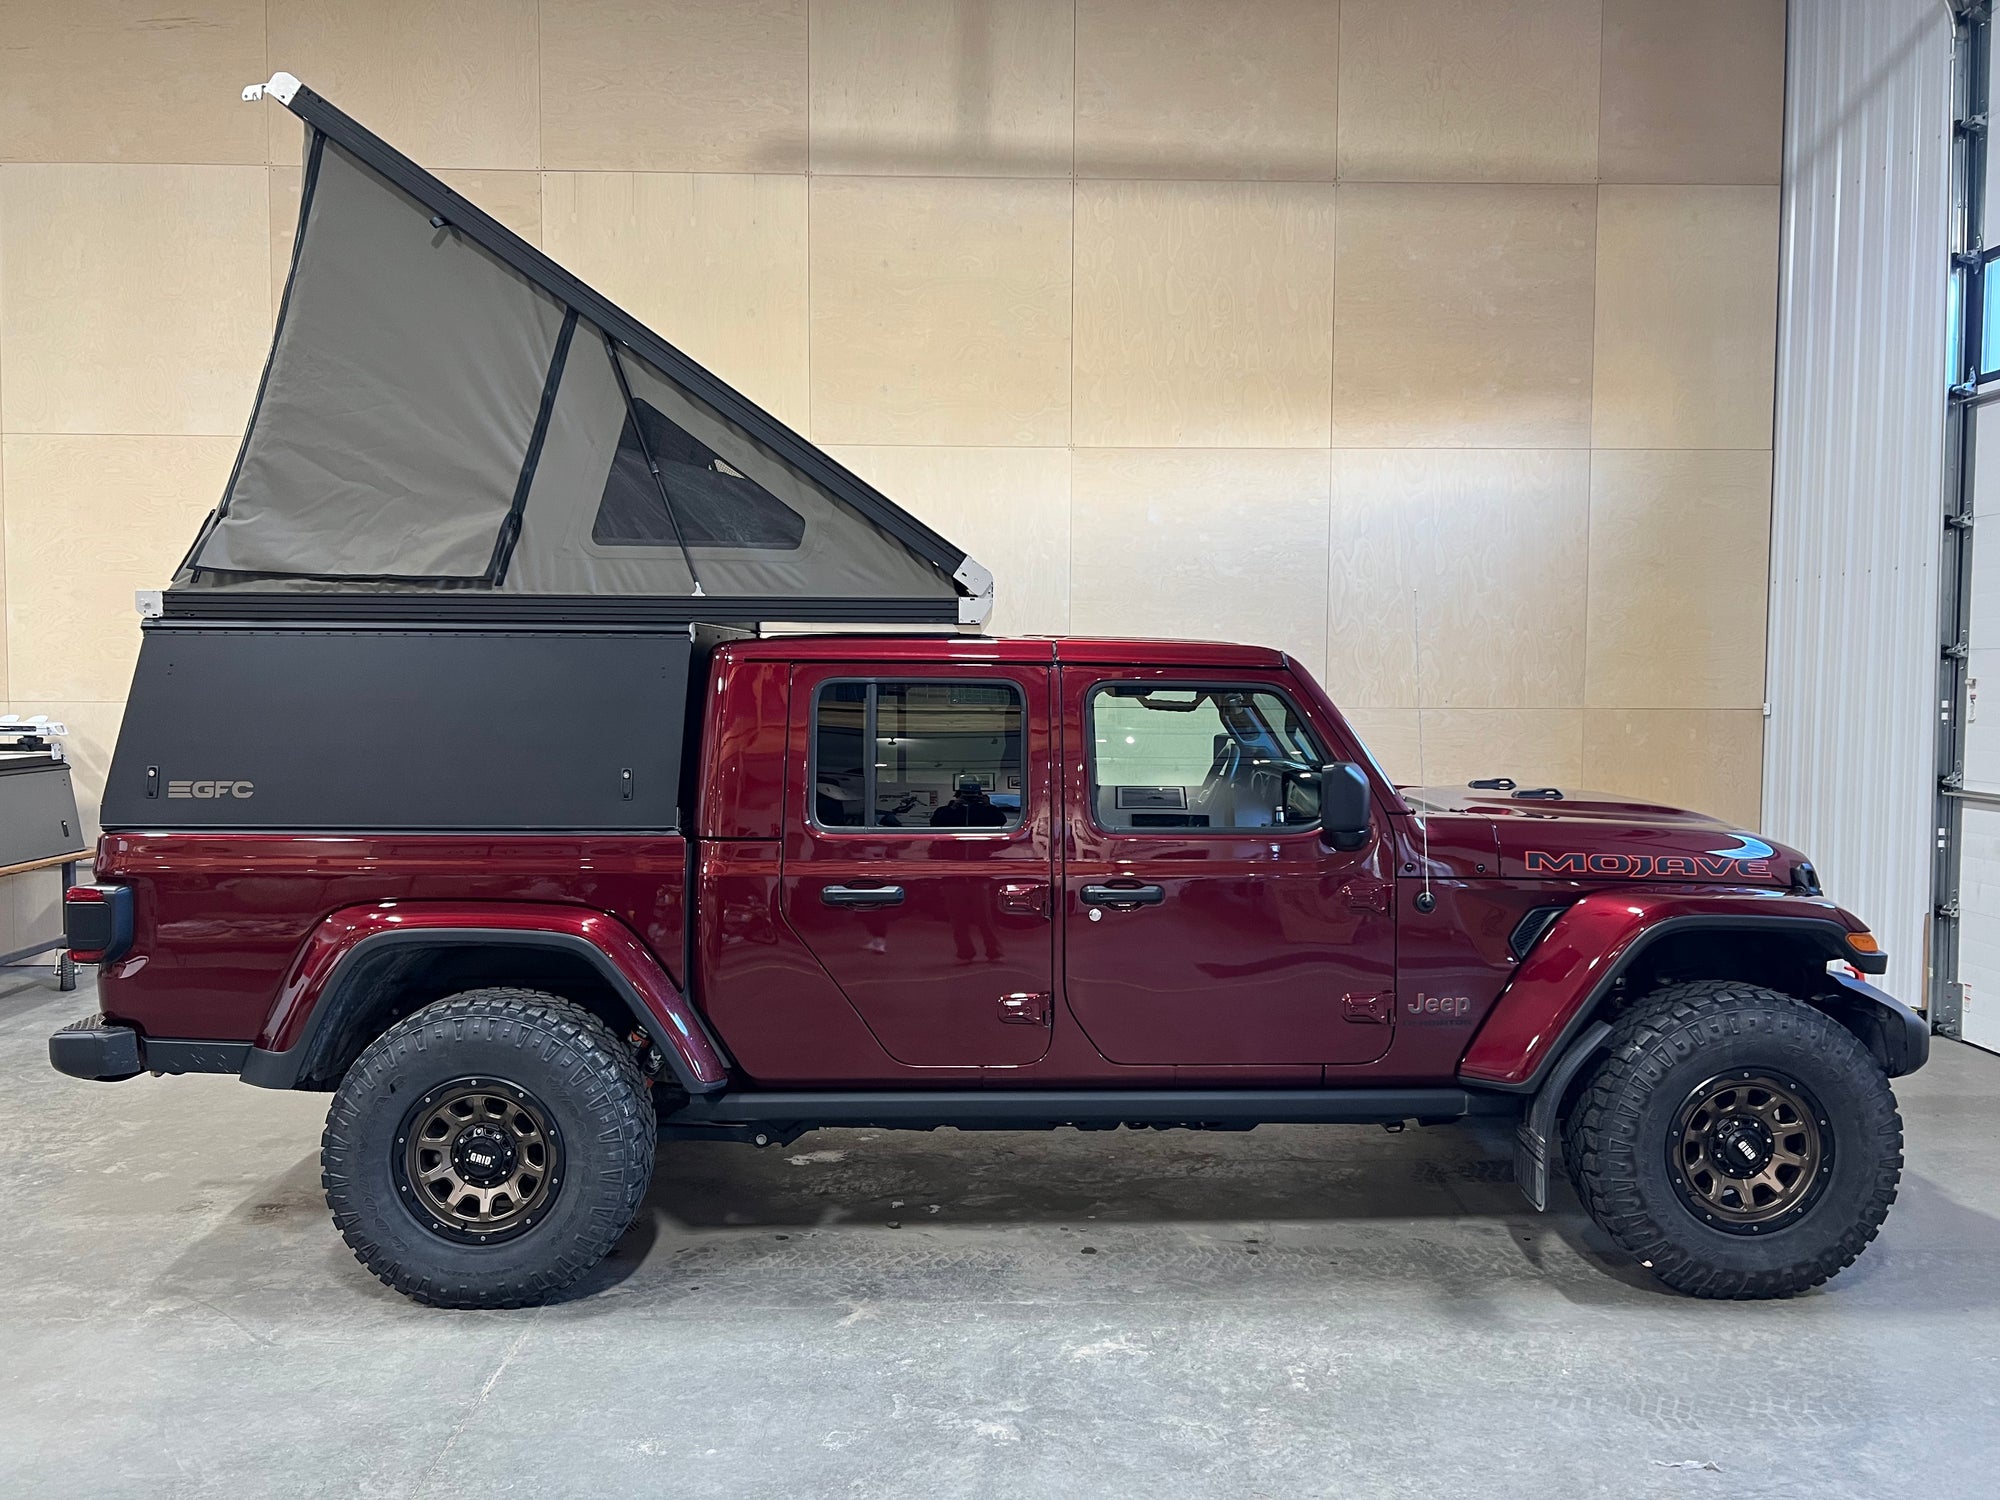 2021 Jeep Gladiator Camper - Build #5044